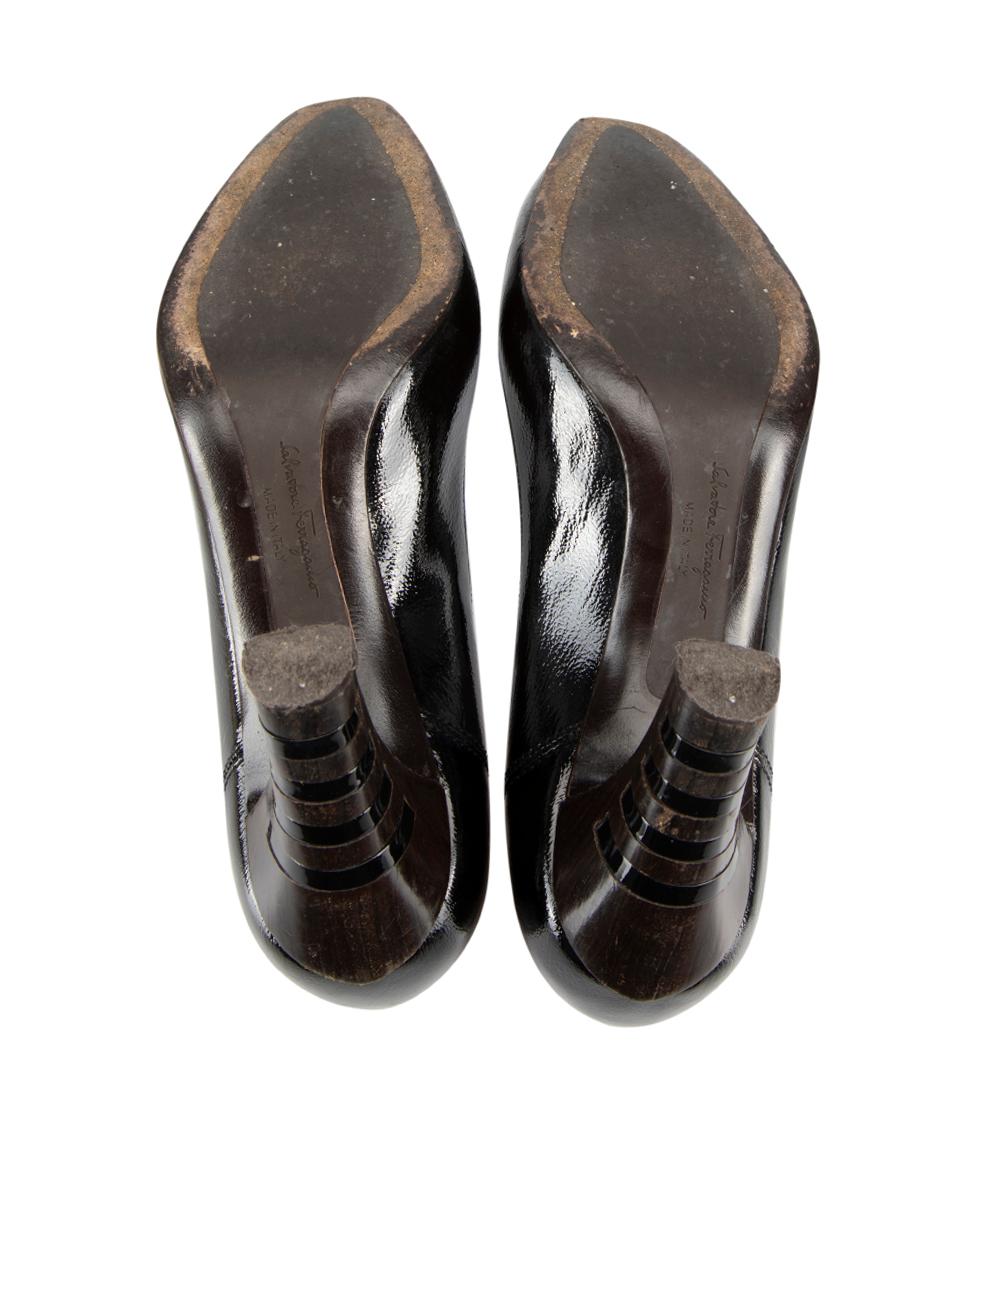 Women's Salvatore Ferragamo Black Patent Leather Wooden Heel Pumps Size US 8 For Sale